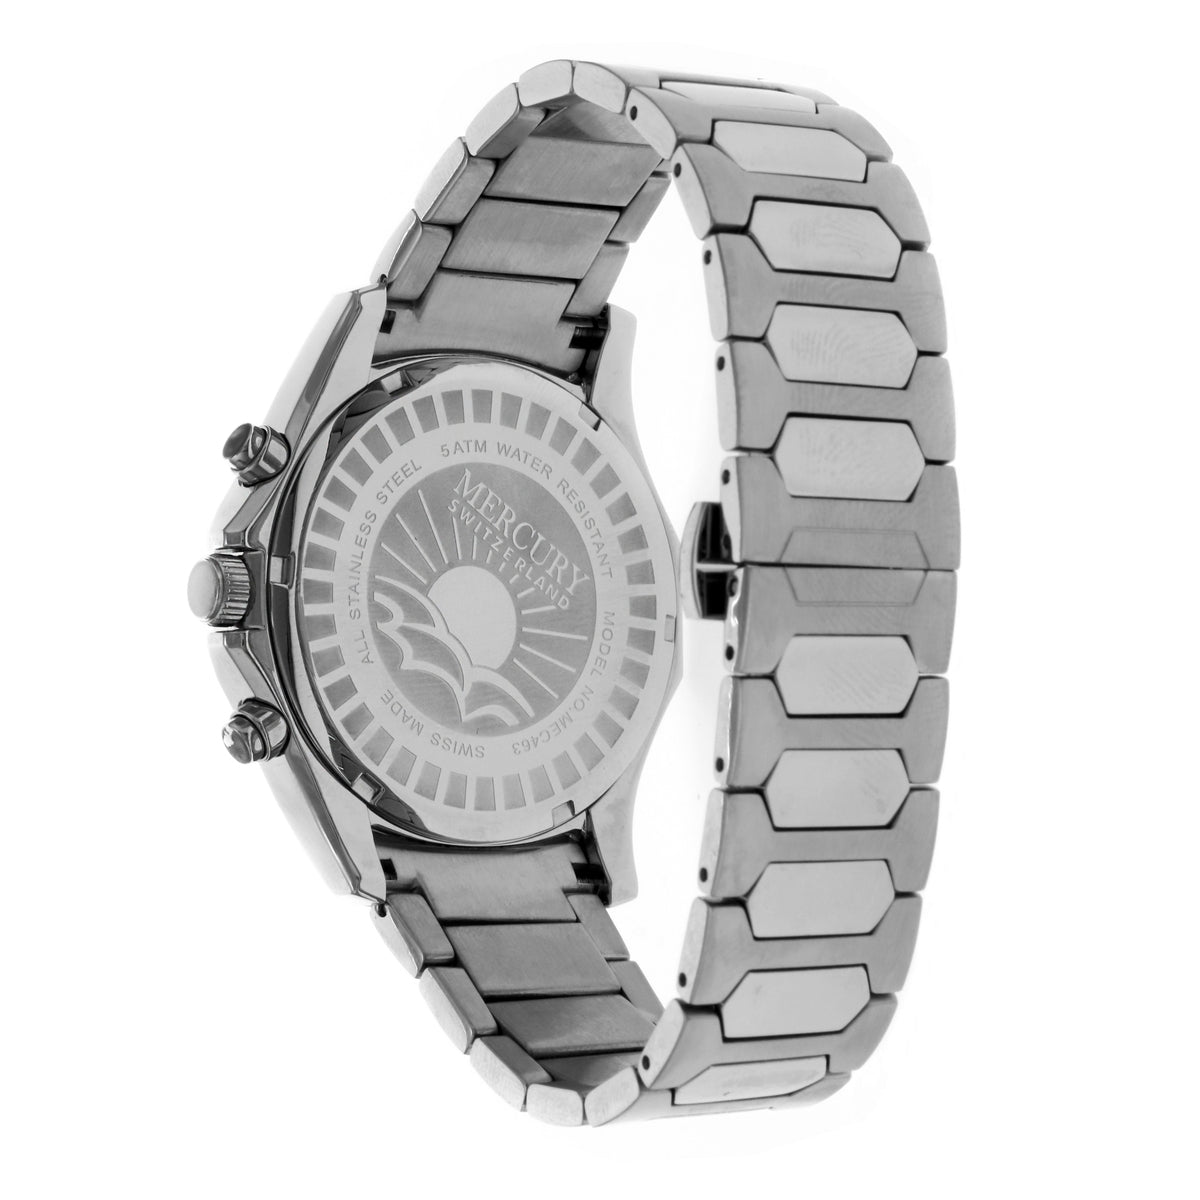 Mercury Men's Swiss Quartz Watch with Black Dial - MER-0013